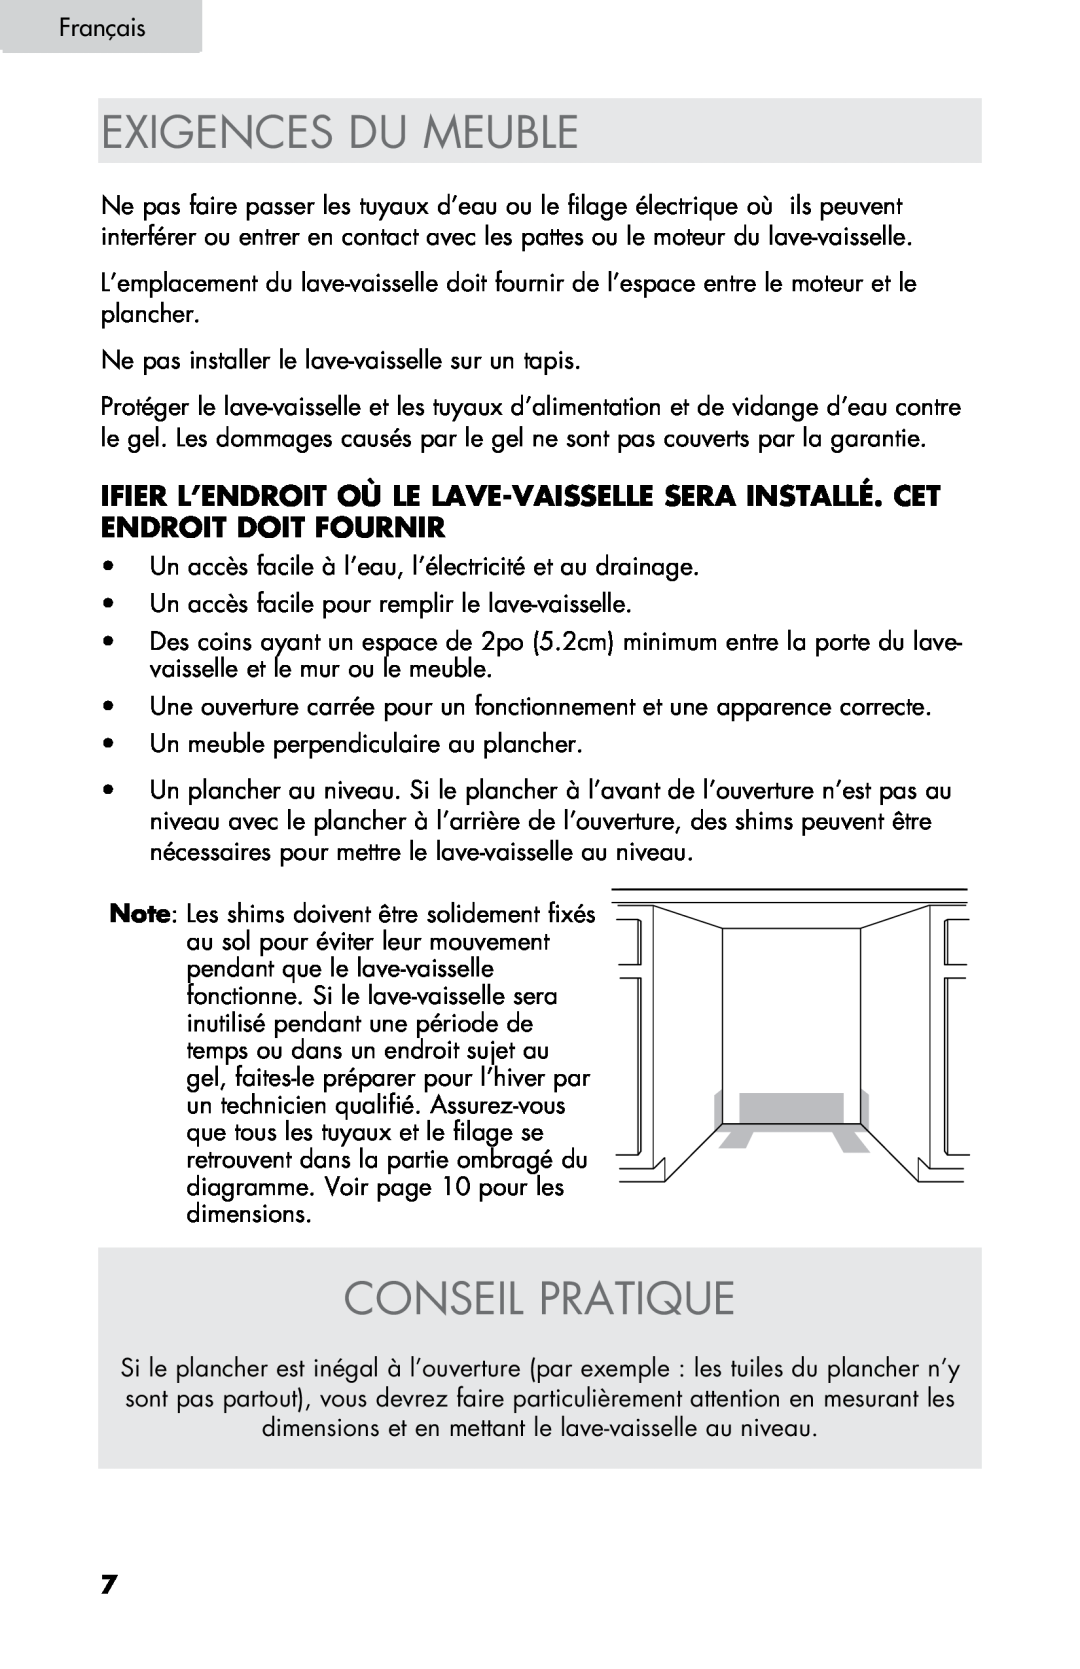 Haier DW-7777-01 manual Exigences Du Meuble, Conseil Pratique, FrançaisE glish 